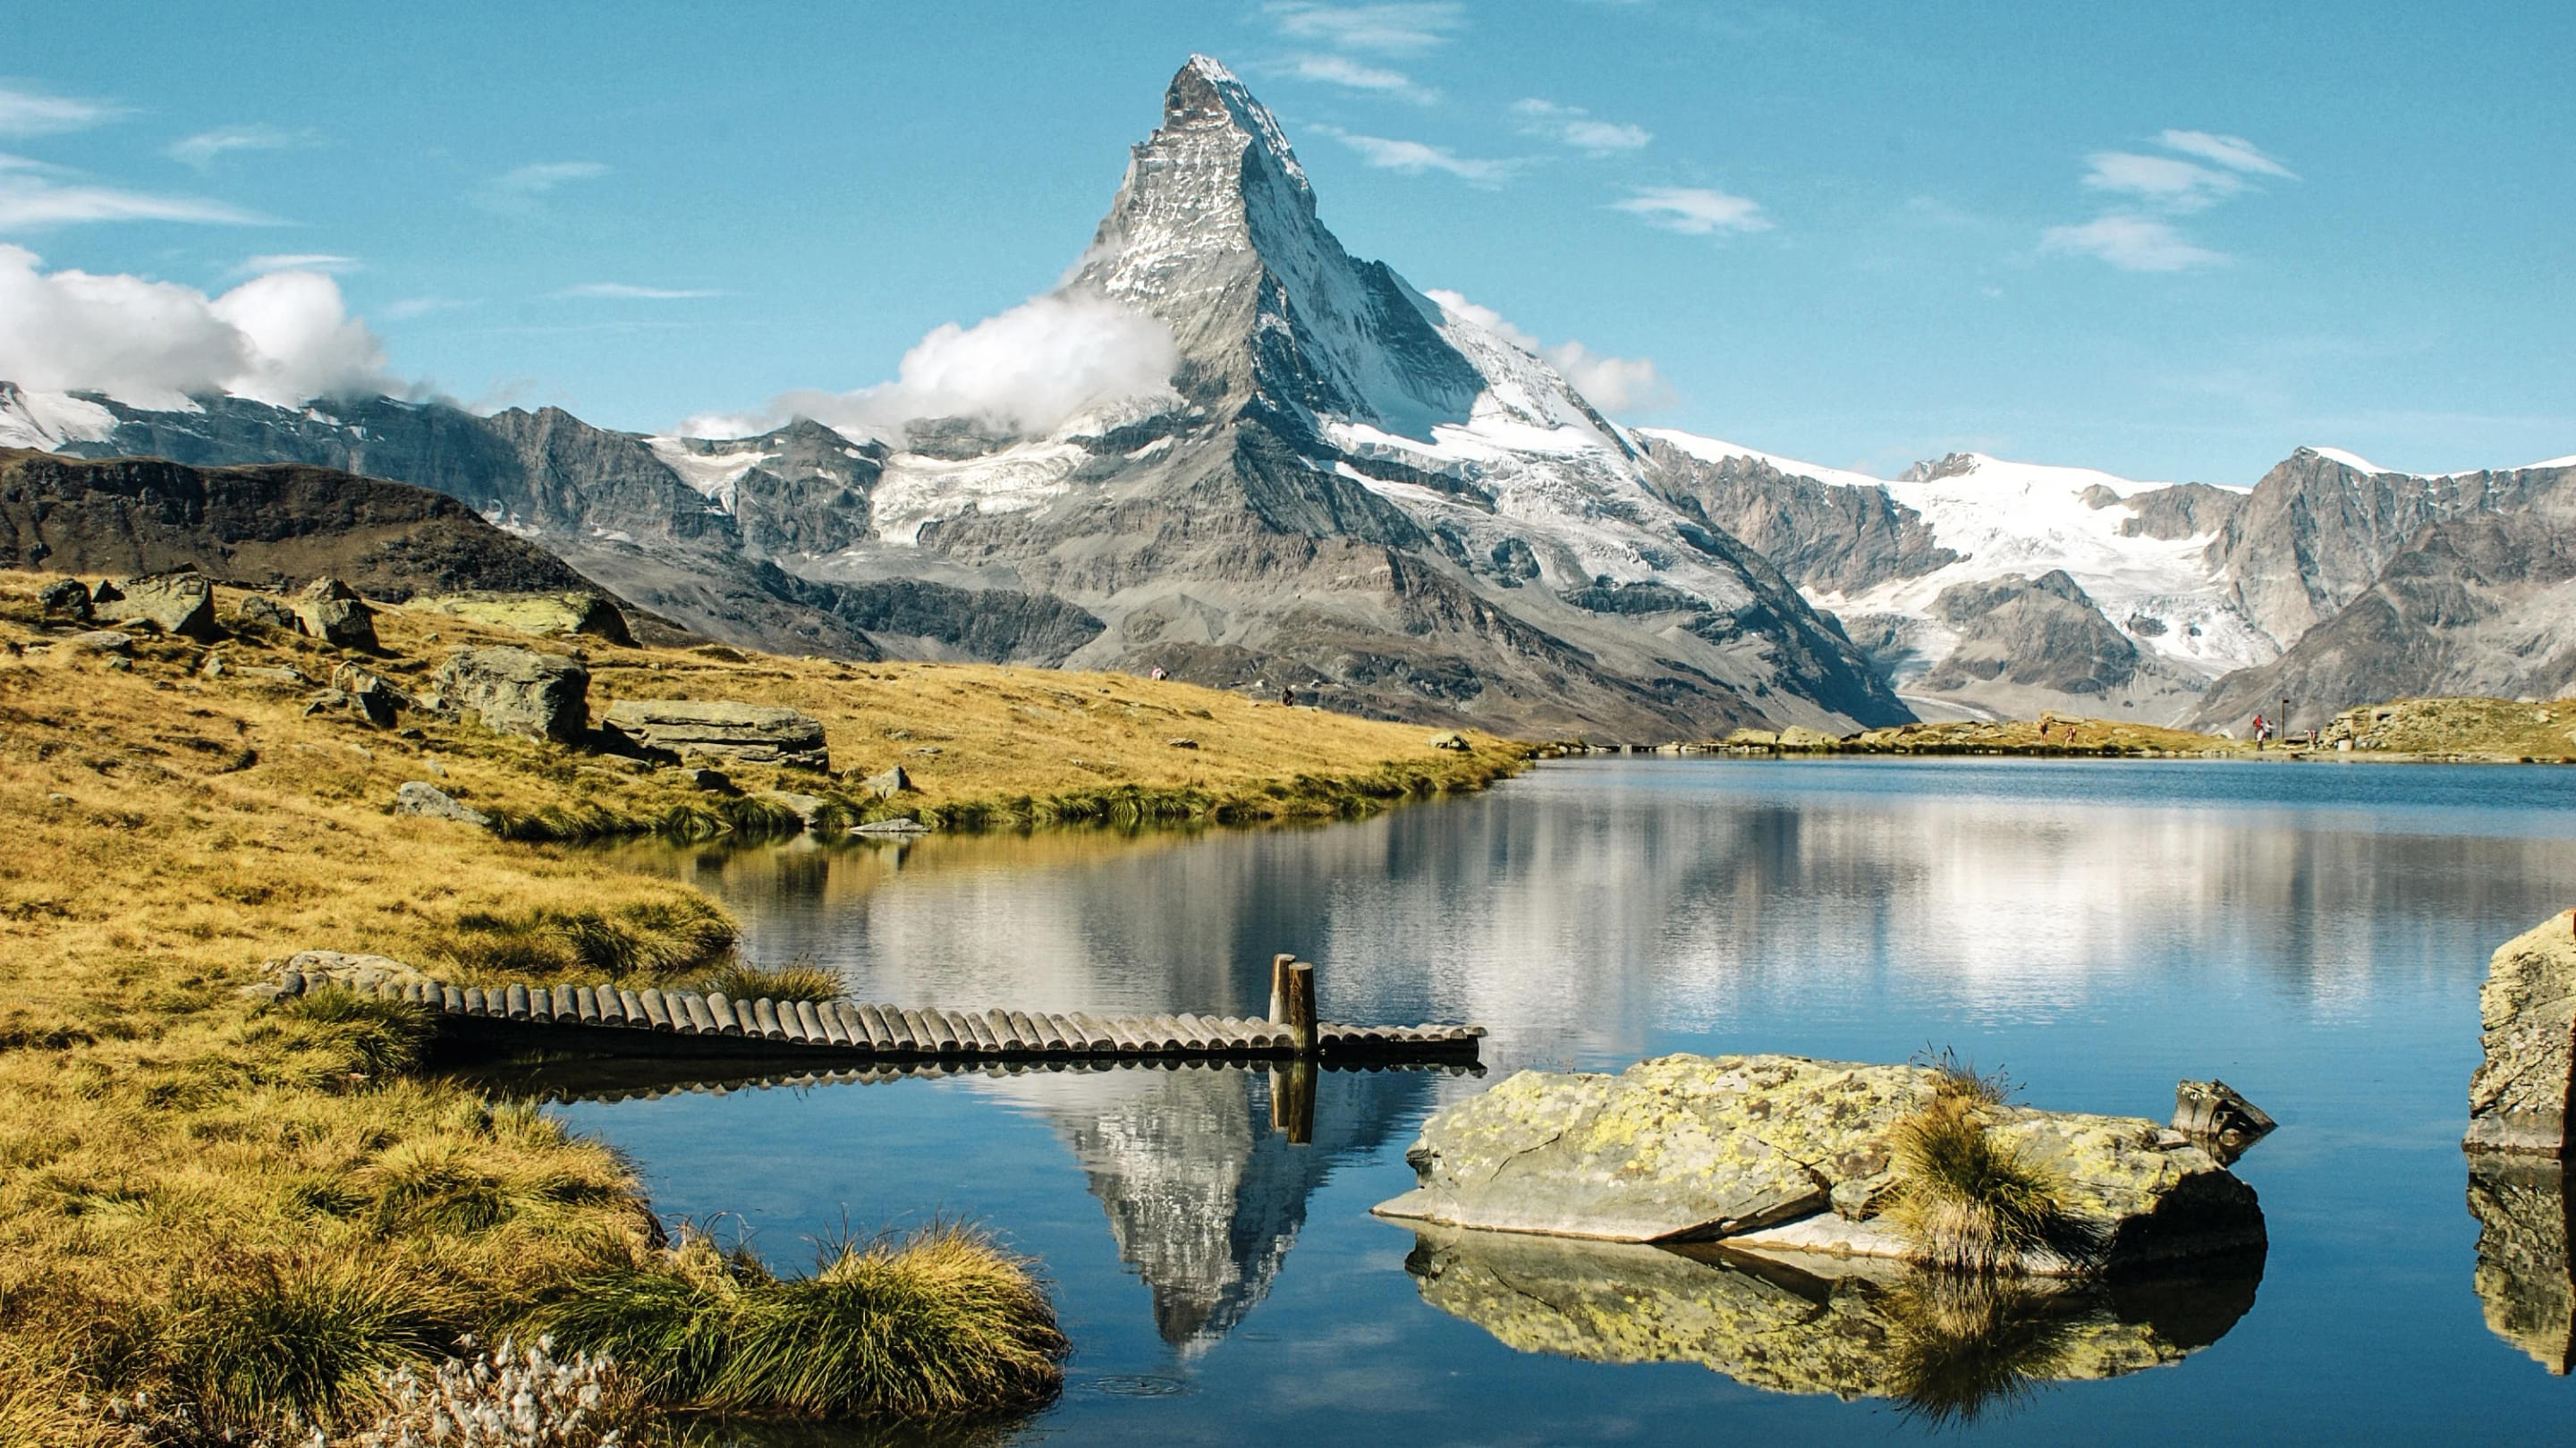 Matterhorn Glacier Paradise, Switzerland Overview